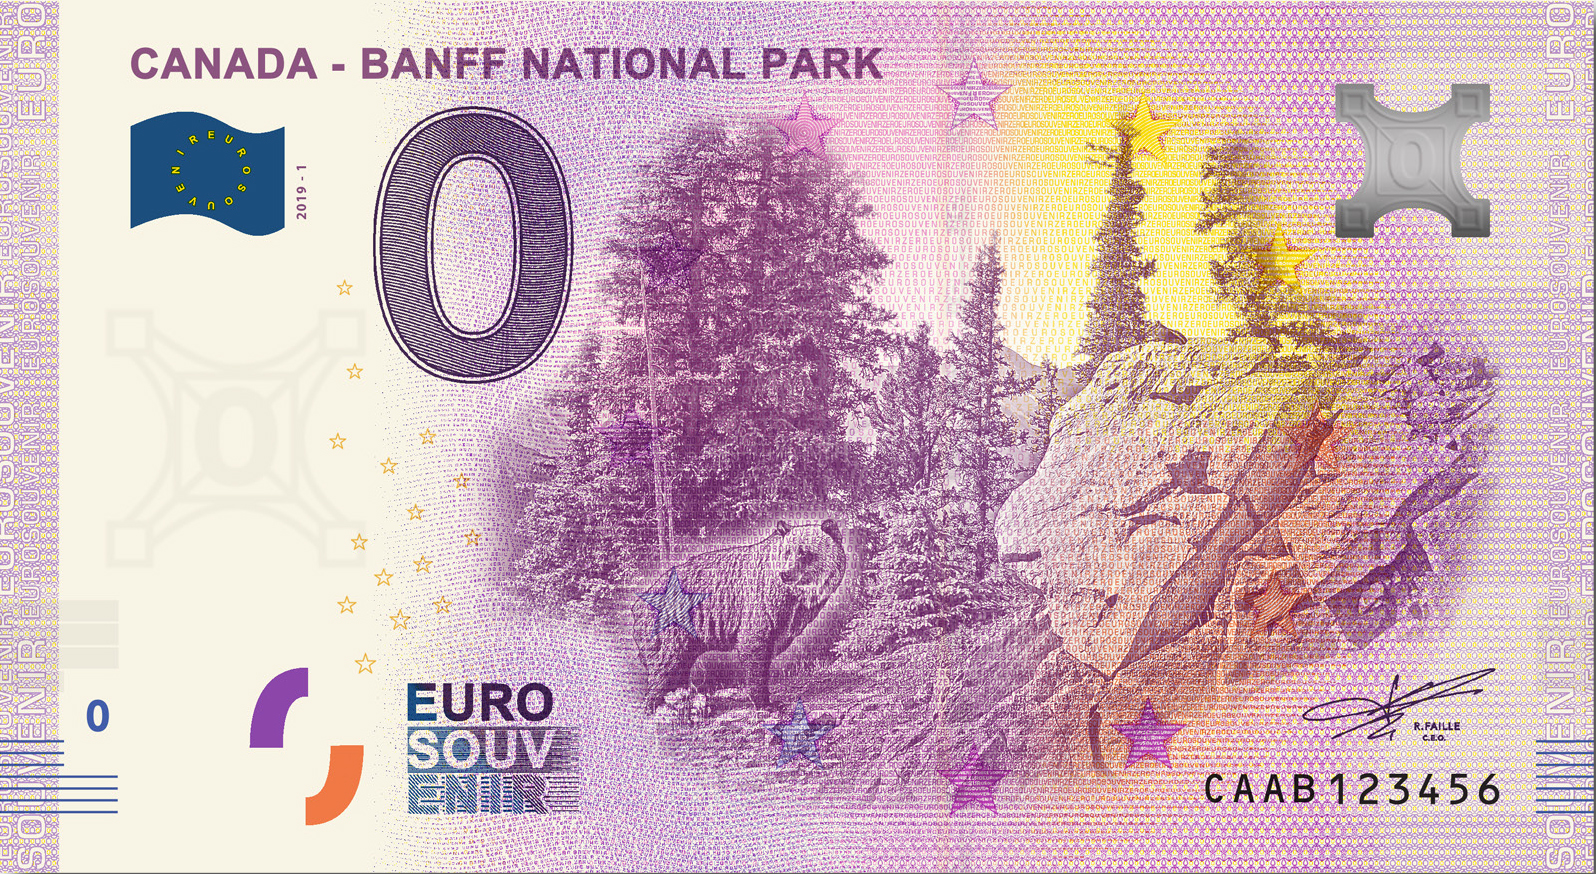 0 Euro souvenir note Canada 2019 - Banff National Park